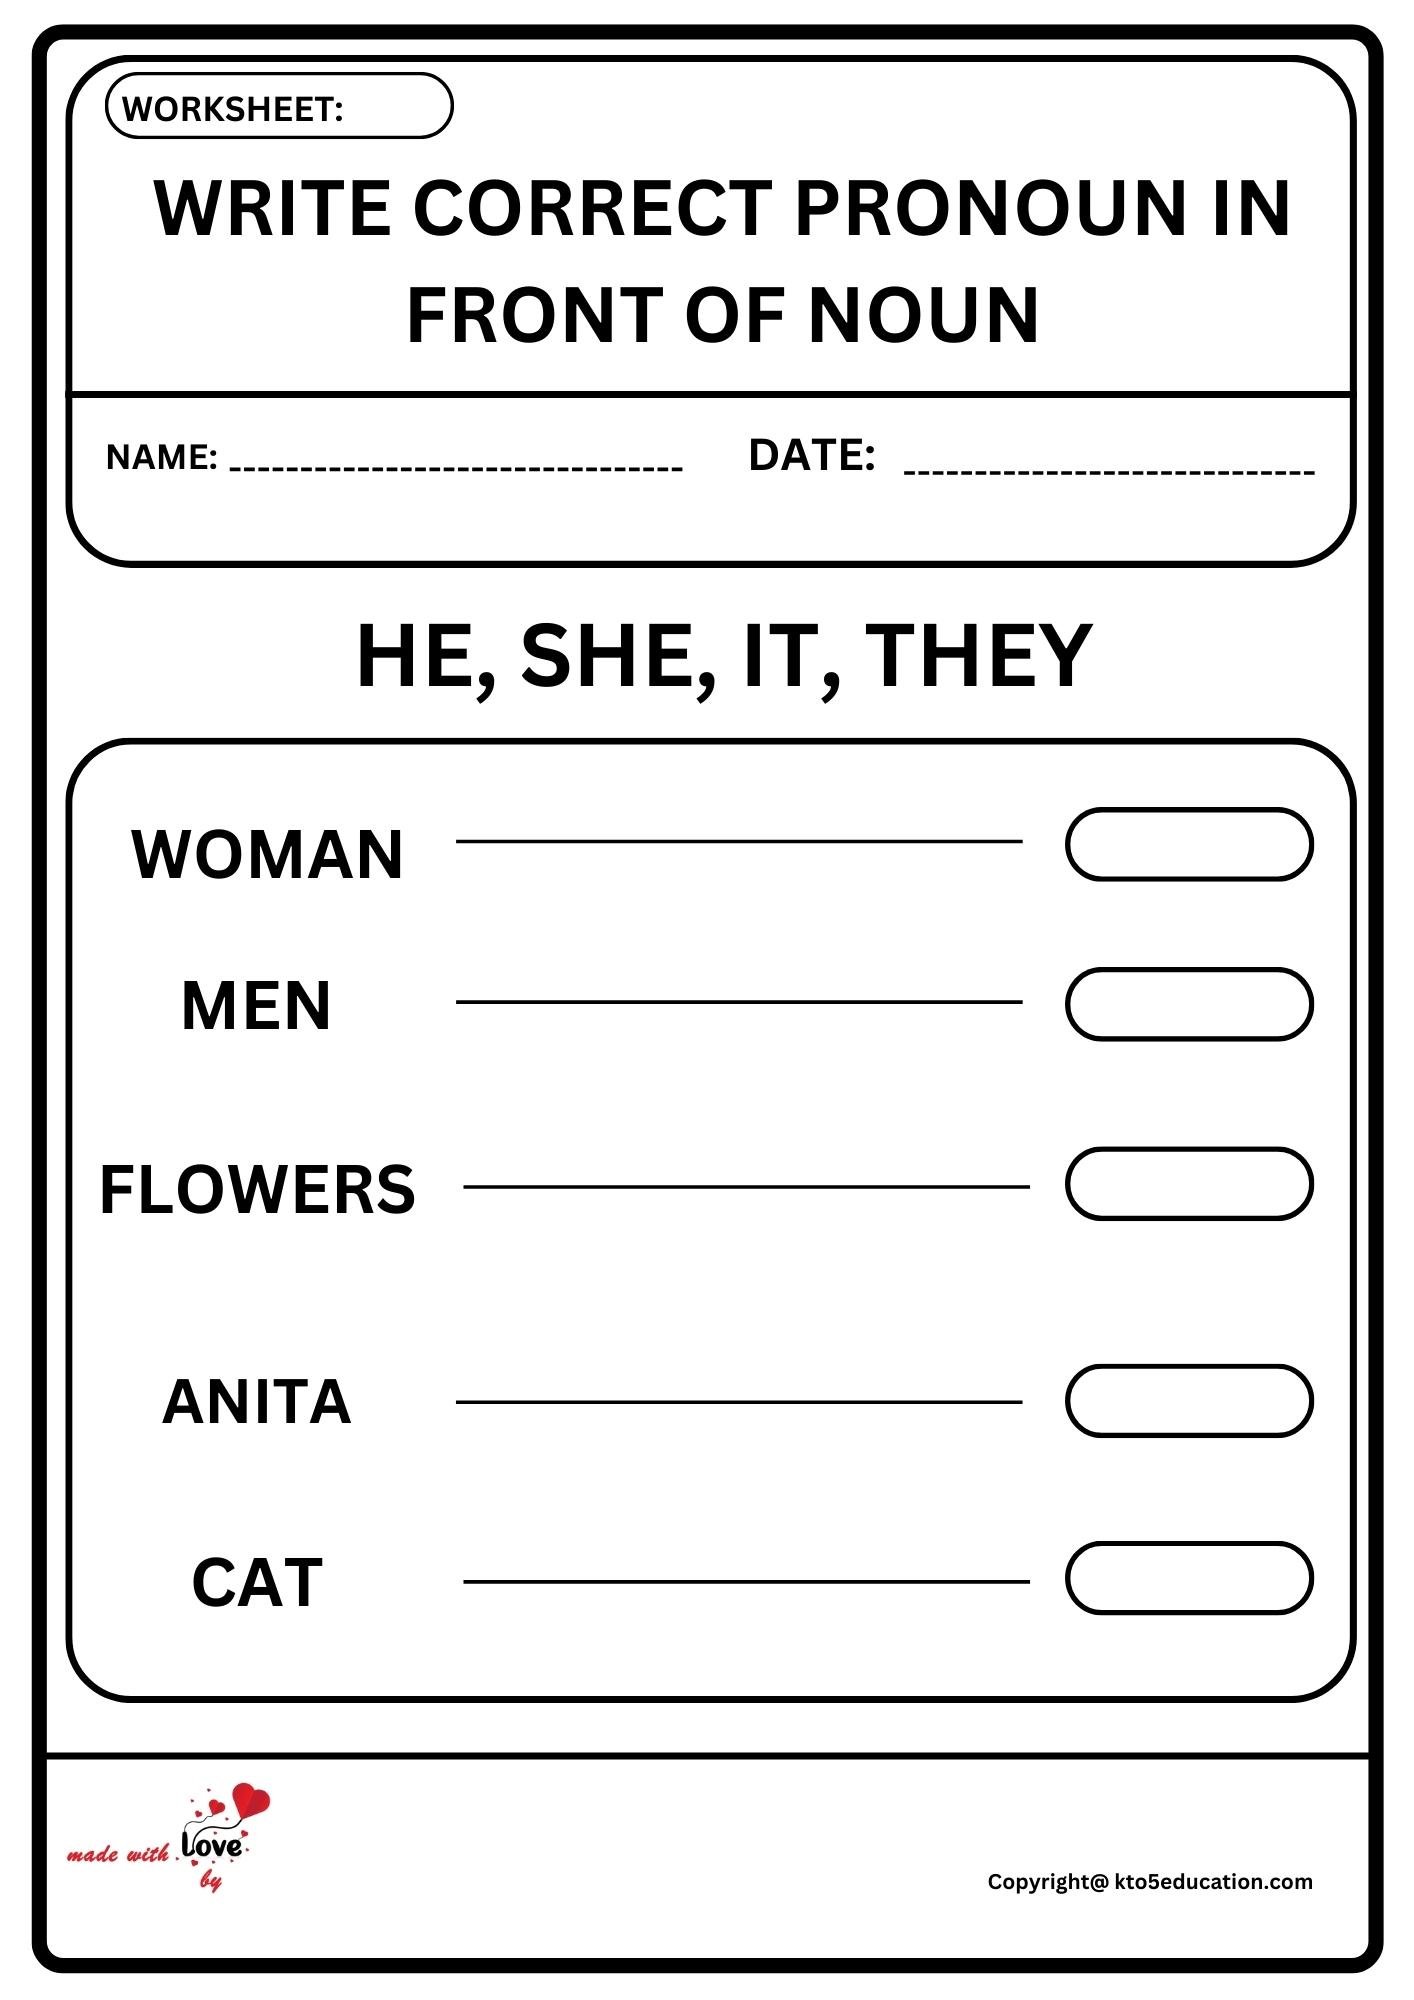 Write Correct Pronoun In Front Of Noun Worksheet